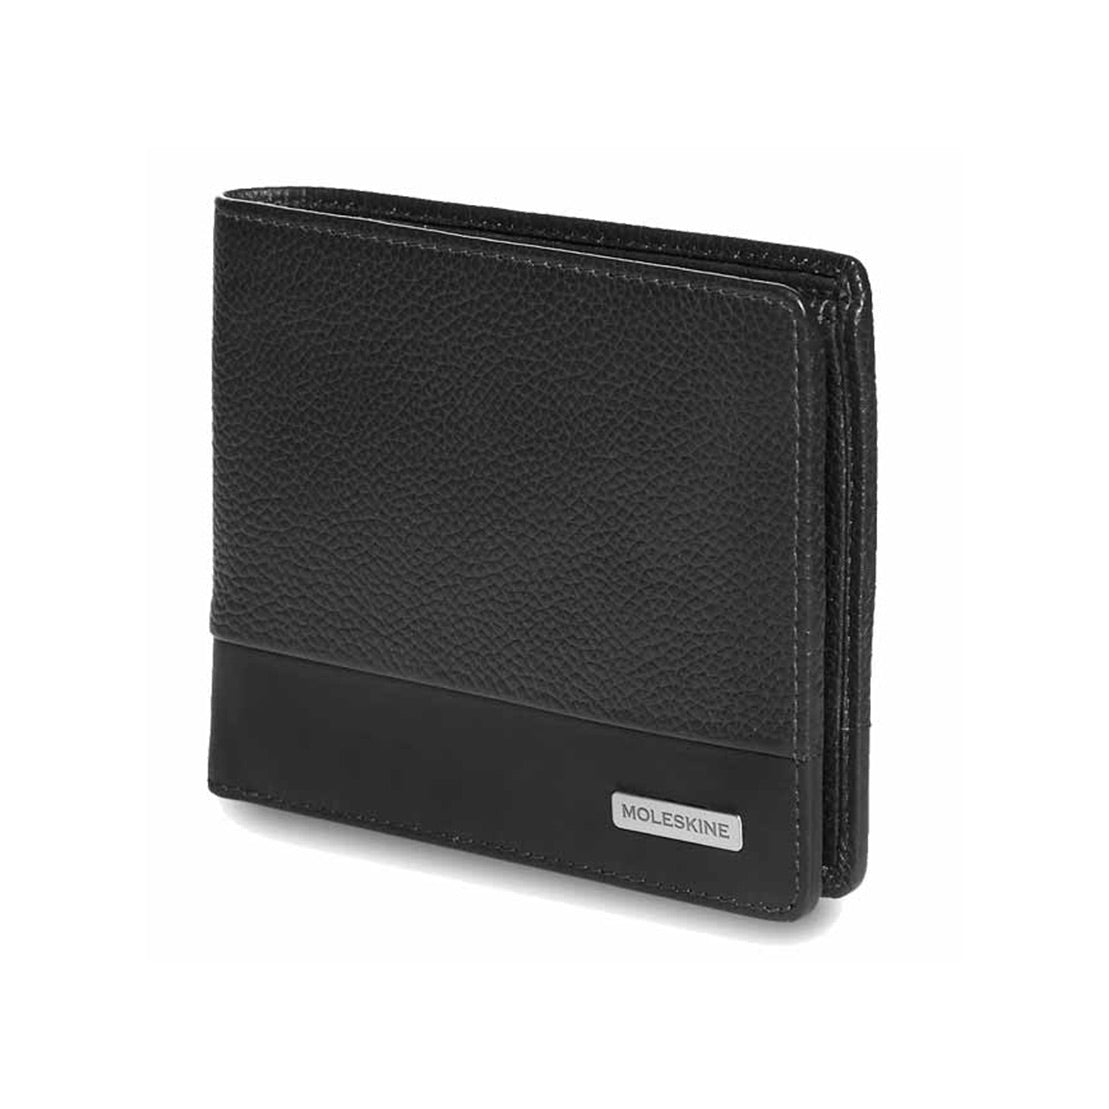 Moleskine Classic Match Genuine Leather Wallet Black